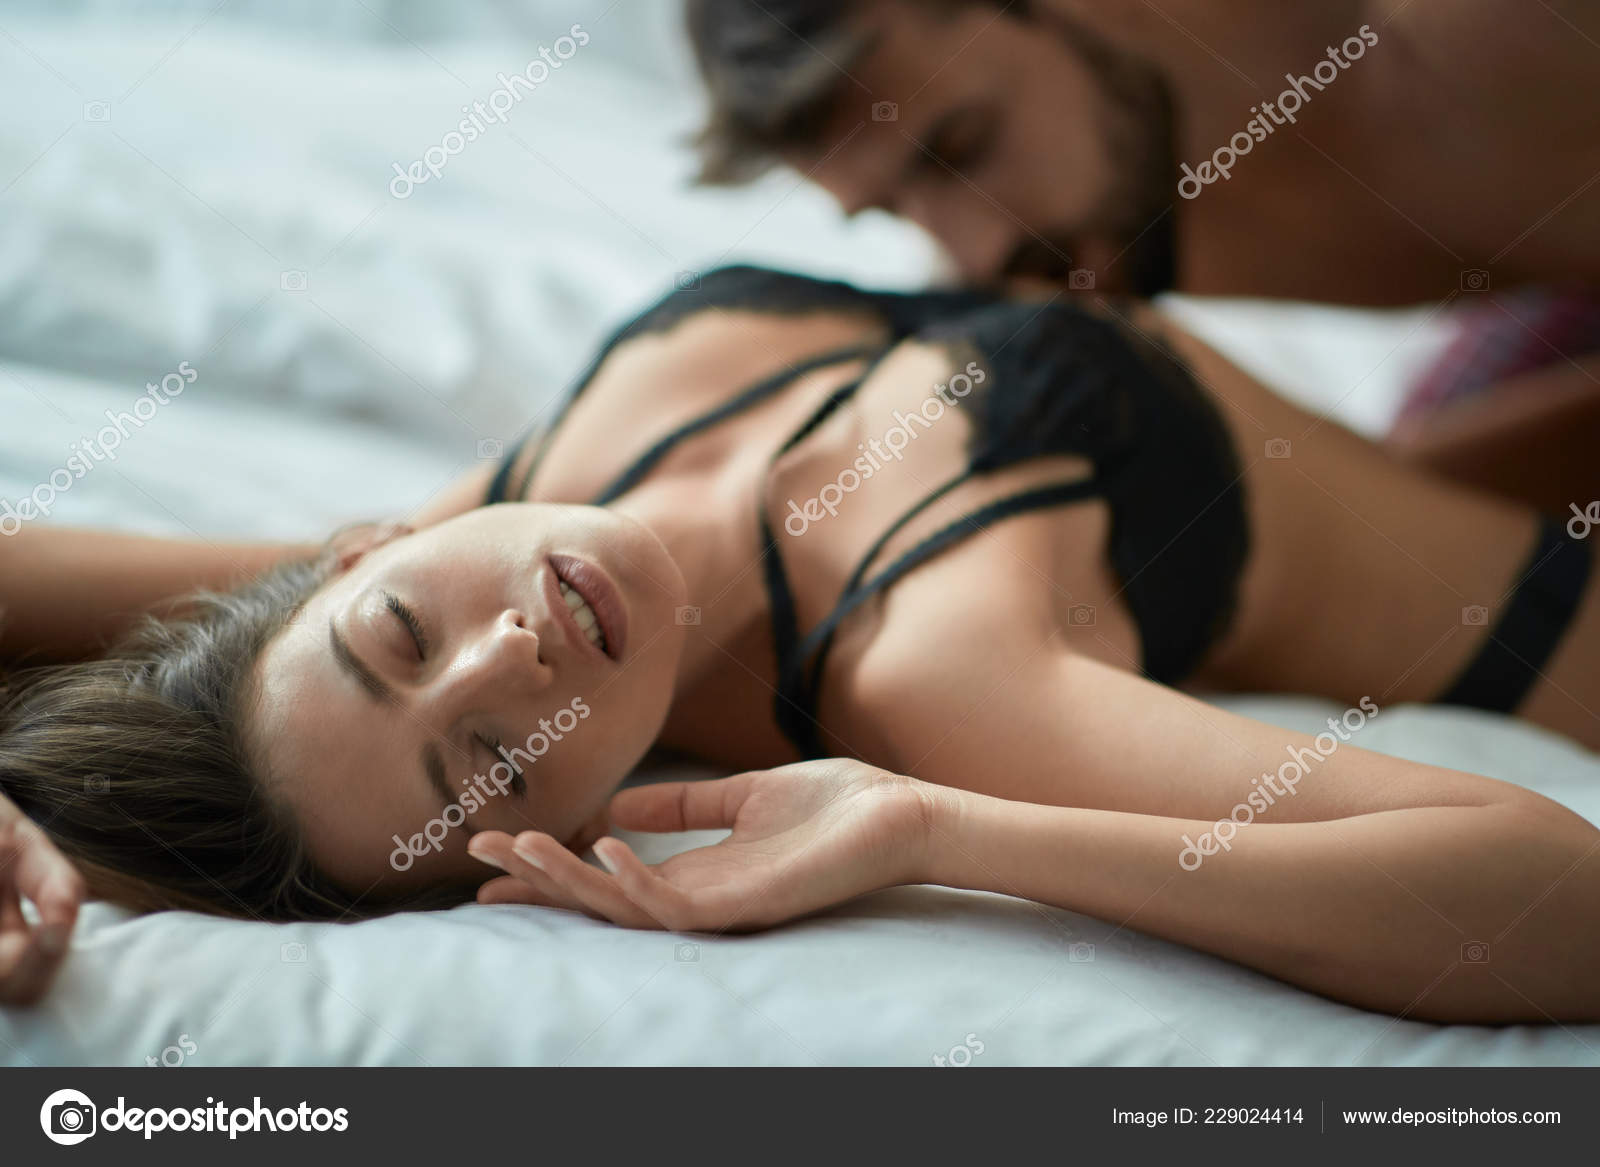 Woman Making Love To A Man